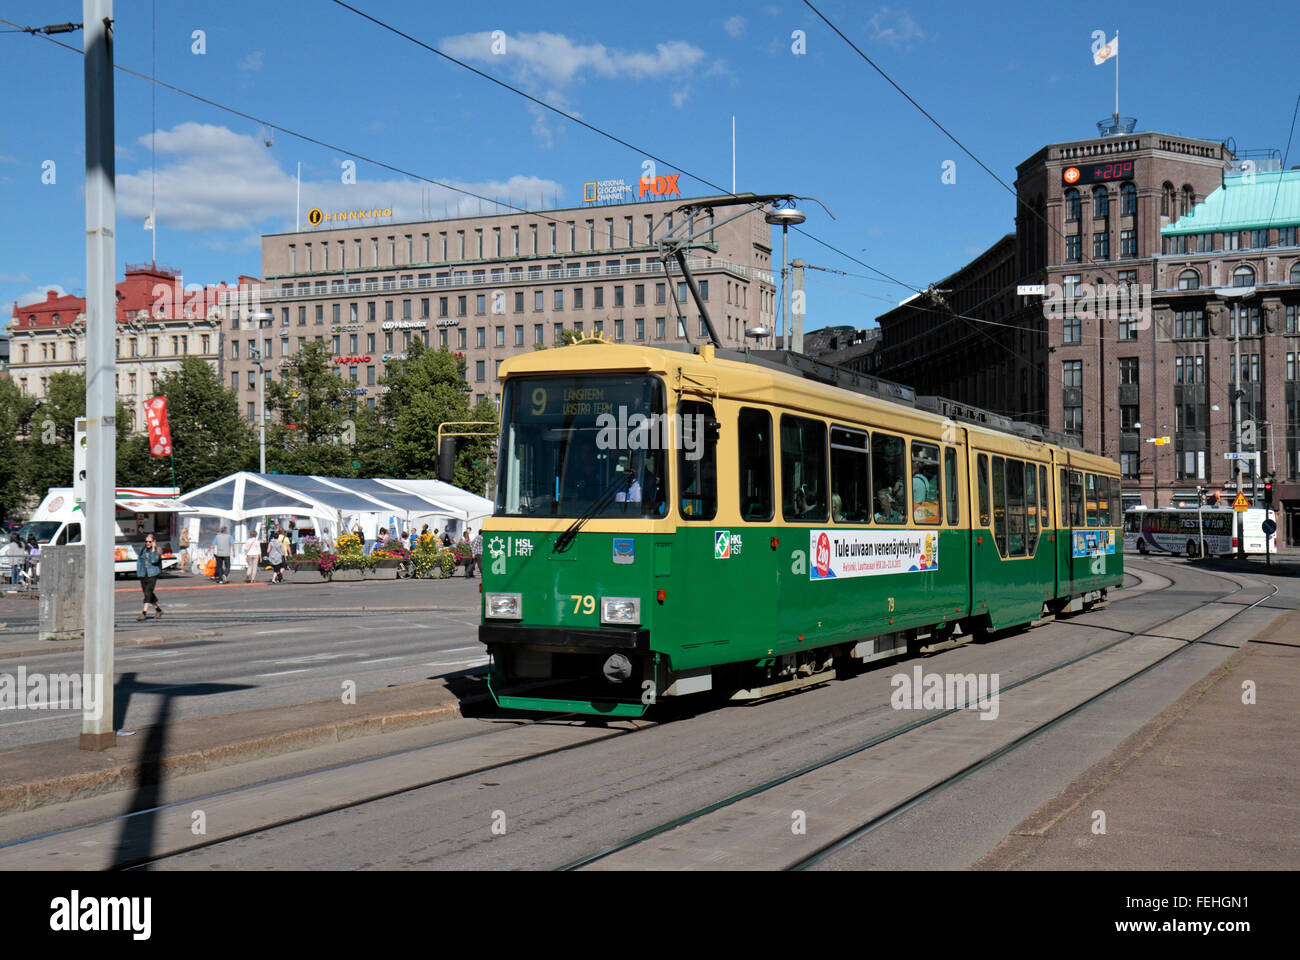 The No 9 electric tram operated by HSL (Helsingin Seudun Liikenne) in Helsinki, Finland. Stock Photo